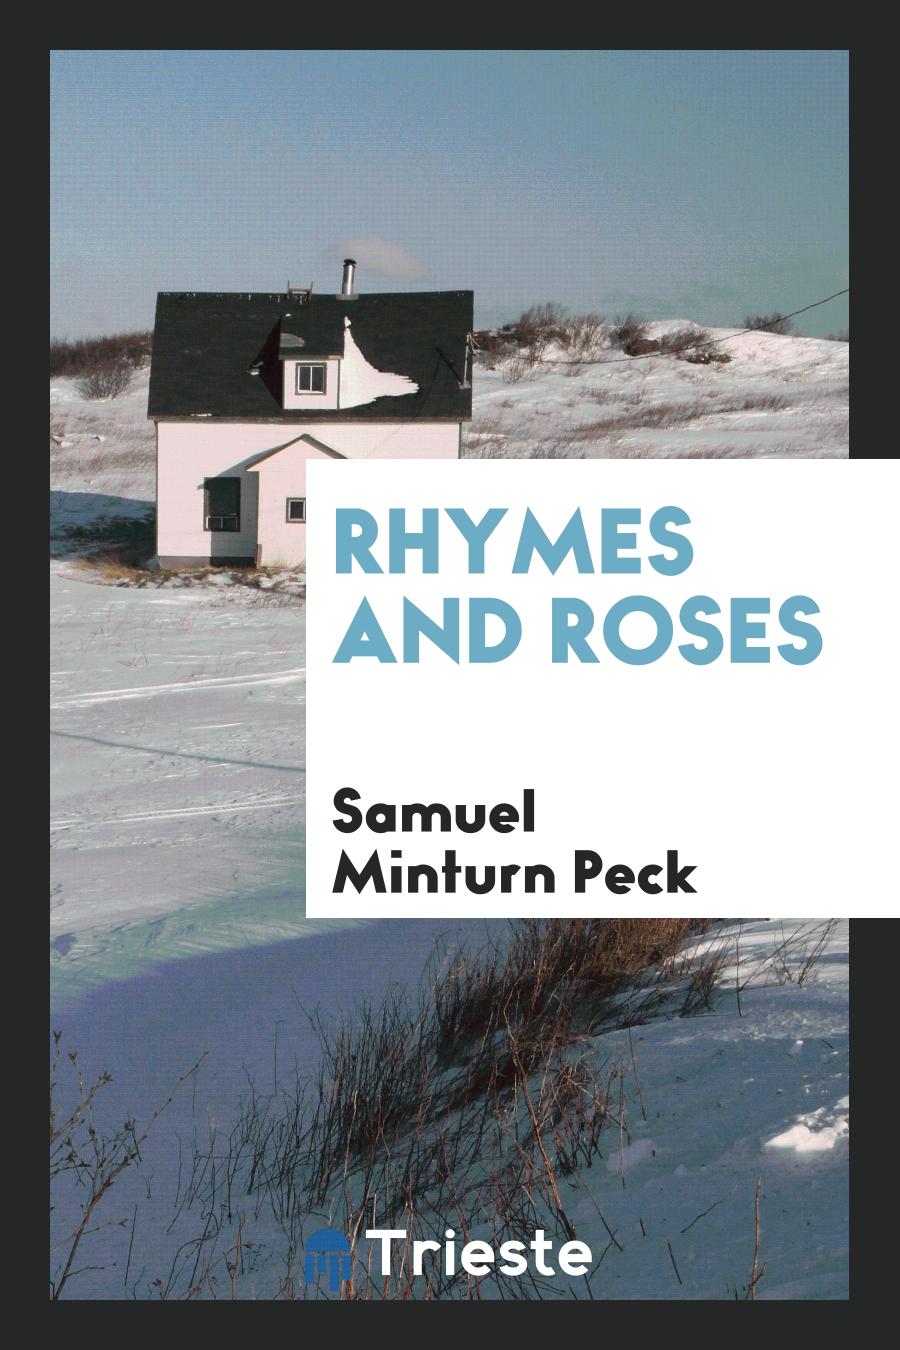 Samuel Minturn Peck - Rhymes and roses